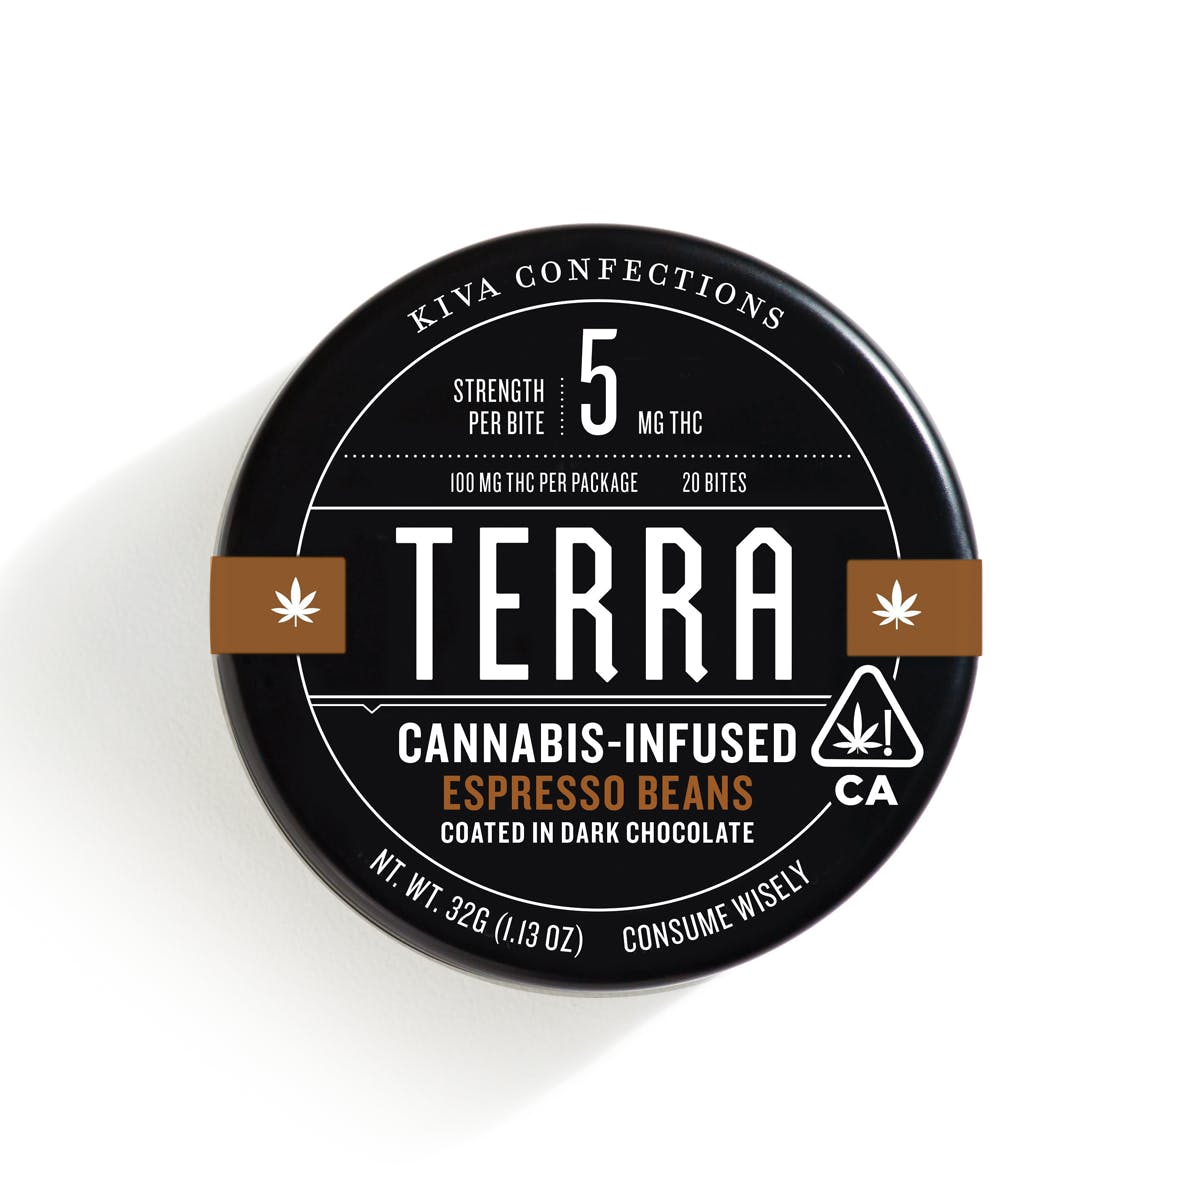 marijuana-dispensaries-hcma-nc-co-op-2c-inc-in-sun-valley-terra-espresso-bites-100mg